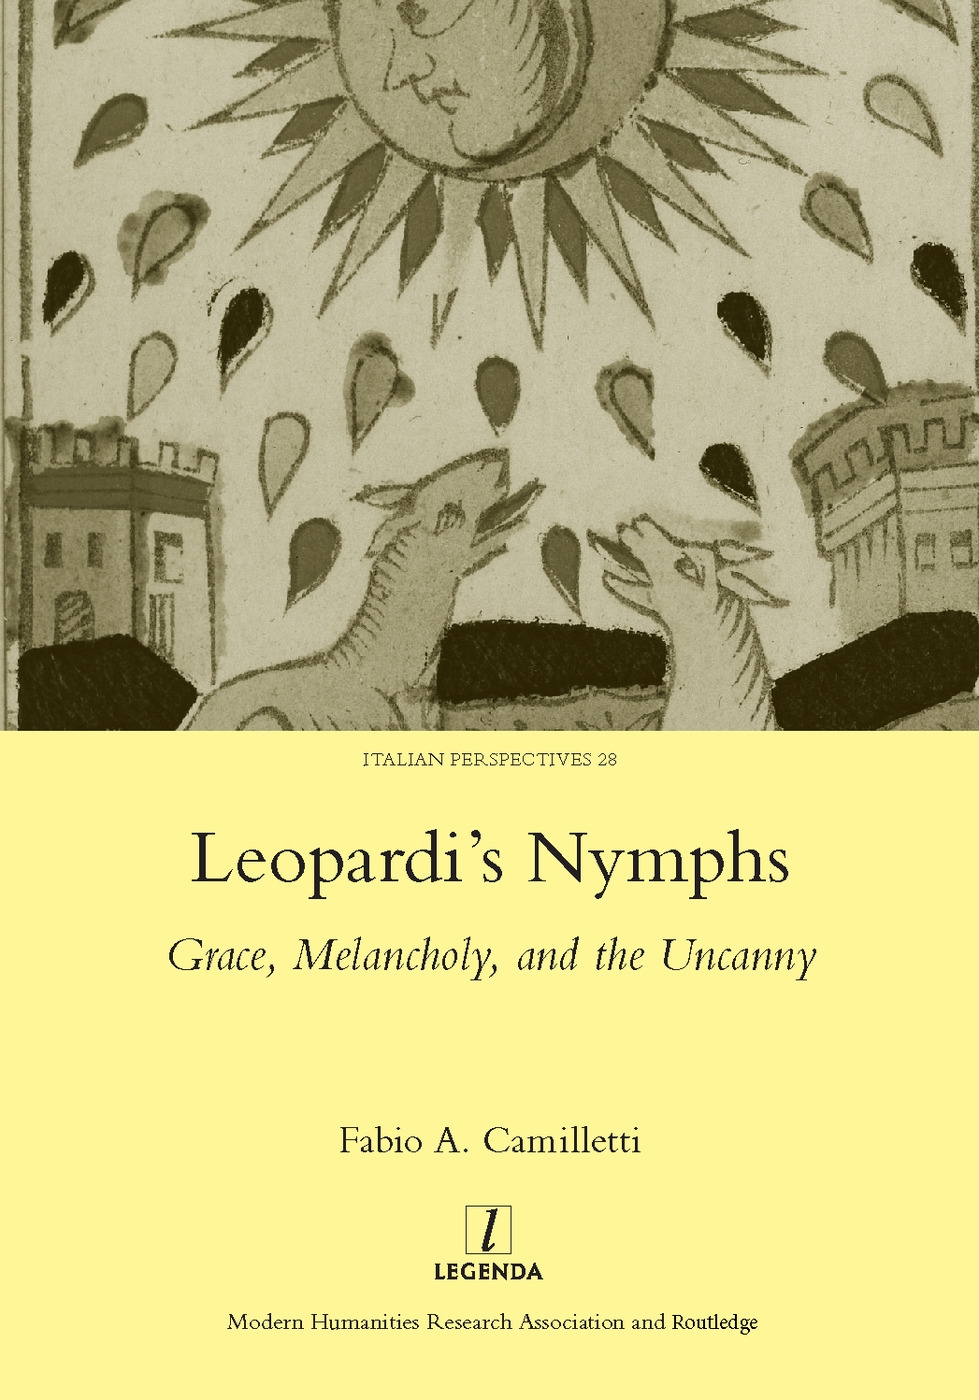 Leopardi’s Nymphs: Grace, Melancholy, and the Uncanny